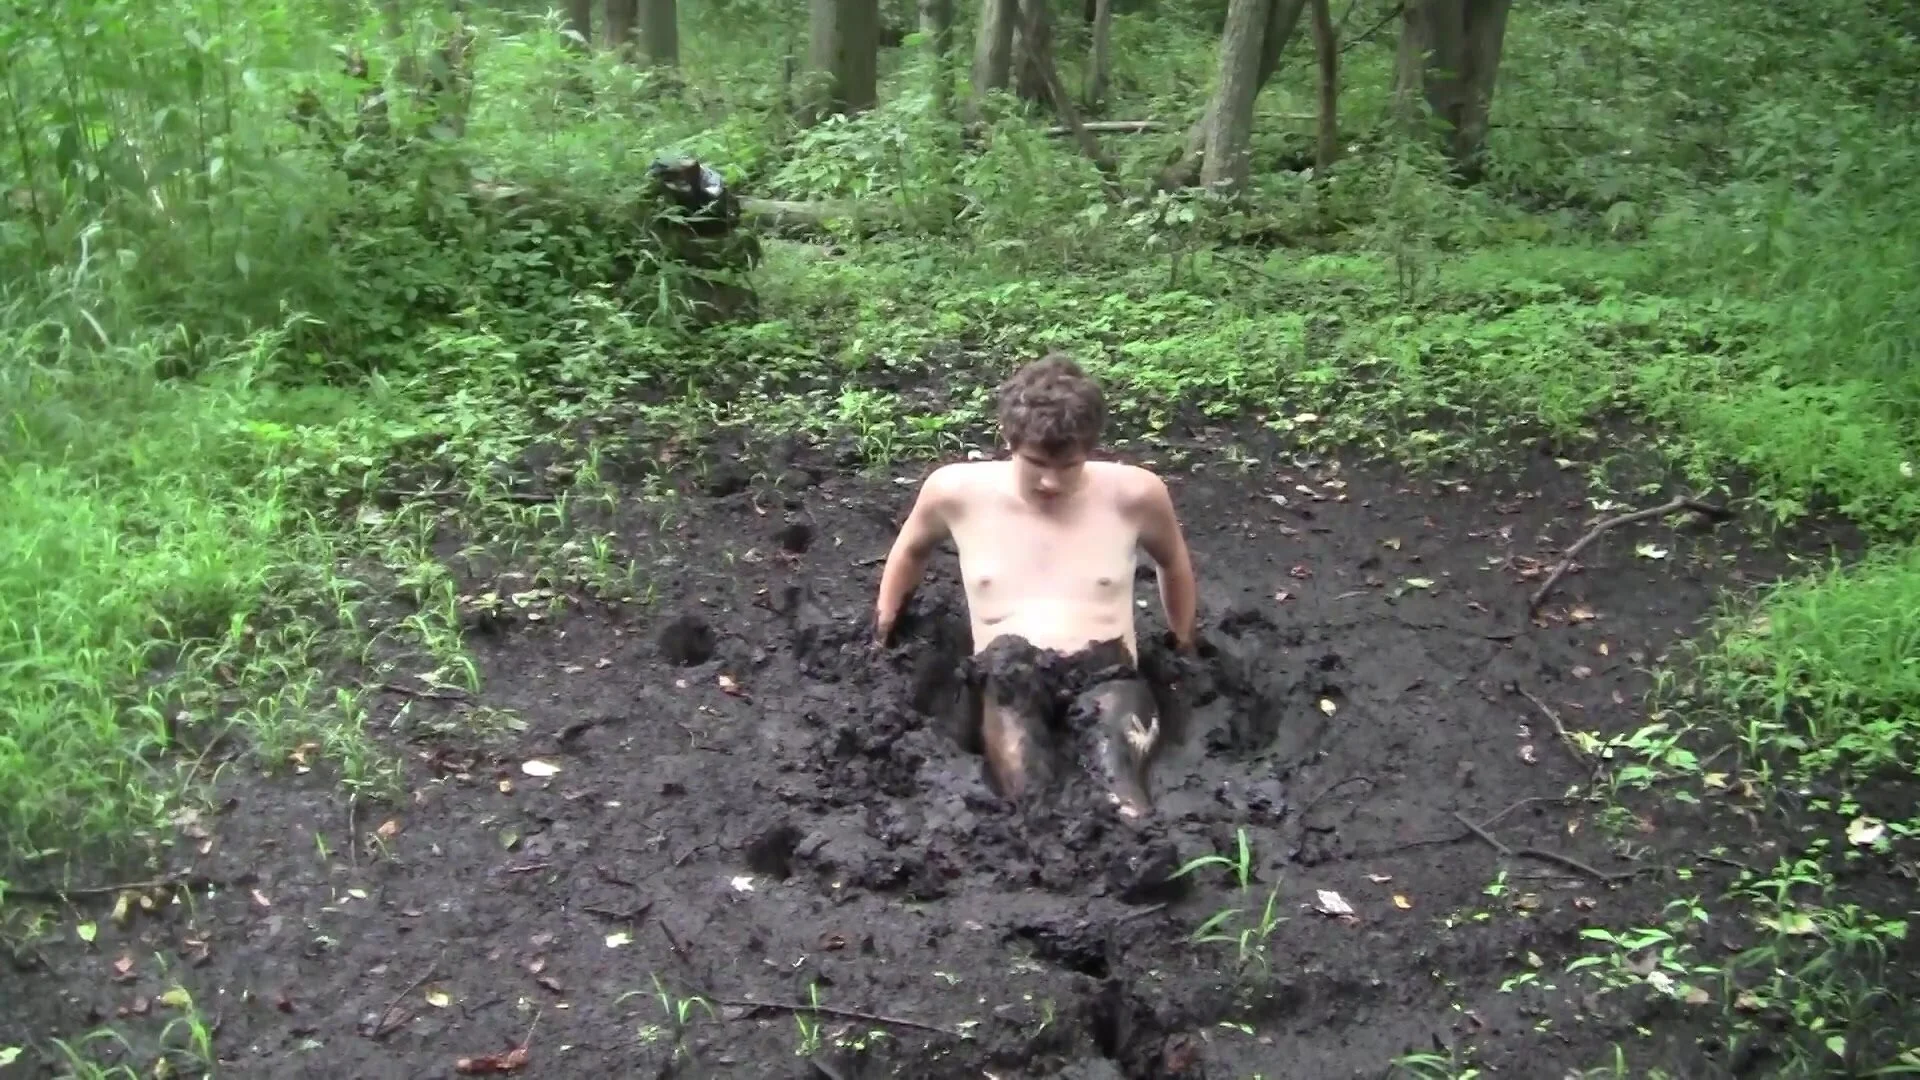 Mud Bog Fuck - Mud Fuck - Mud Fuck |ThisVid.com